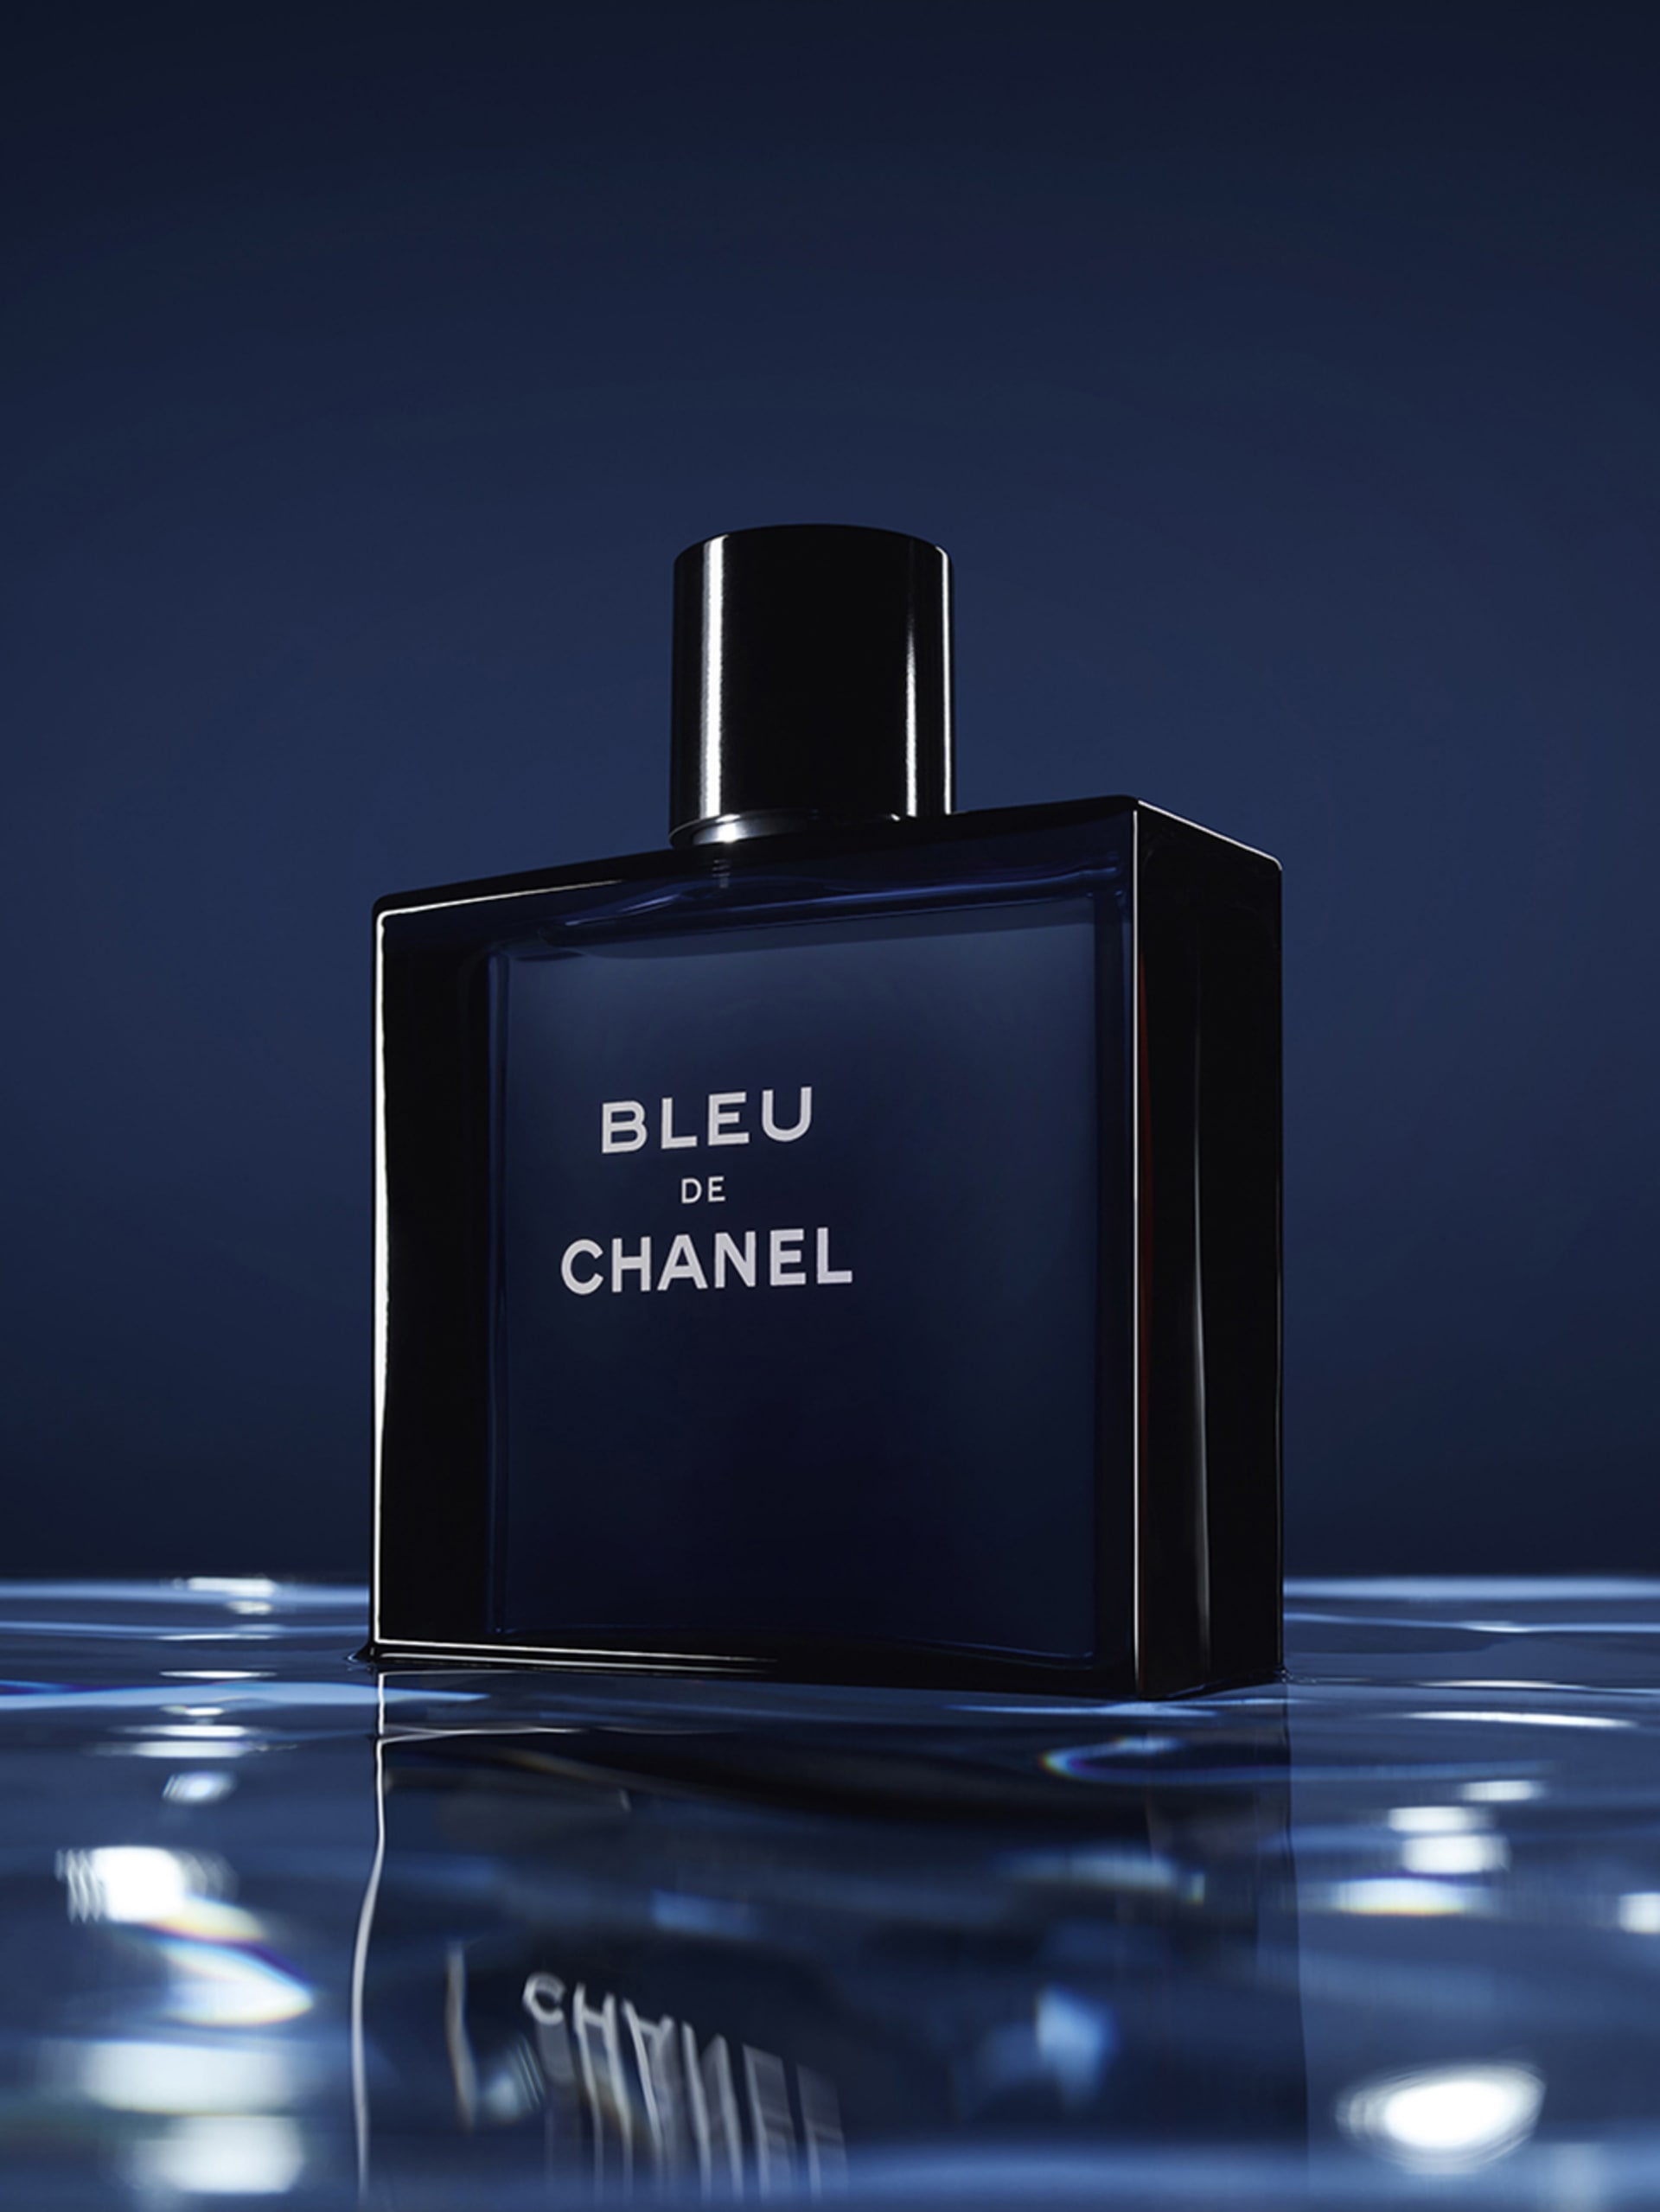 Bleu de Chanel Perfume With Box 3D model  TurboSquid 1886625